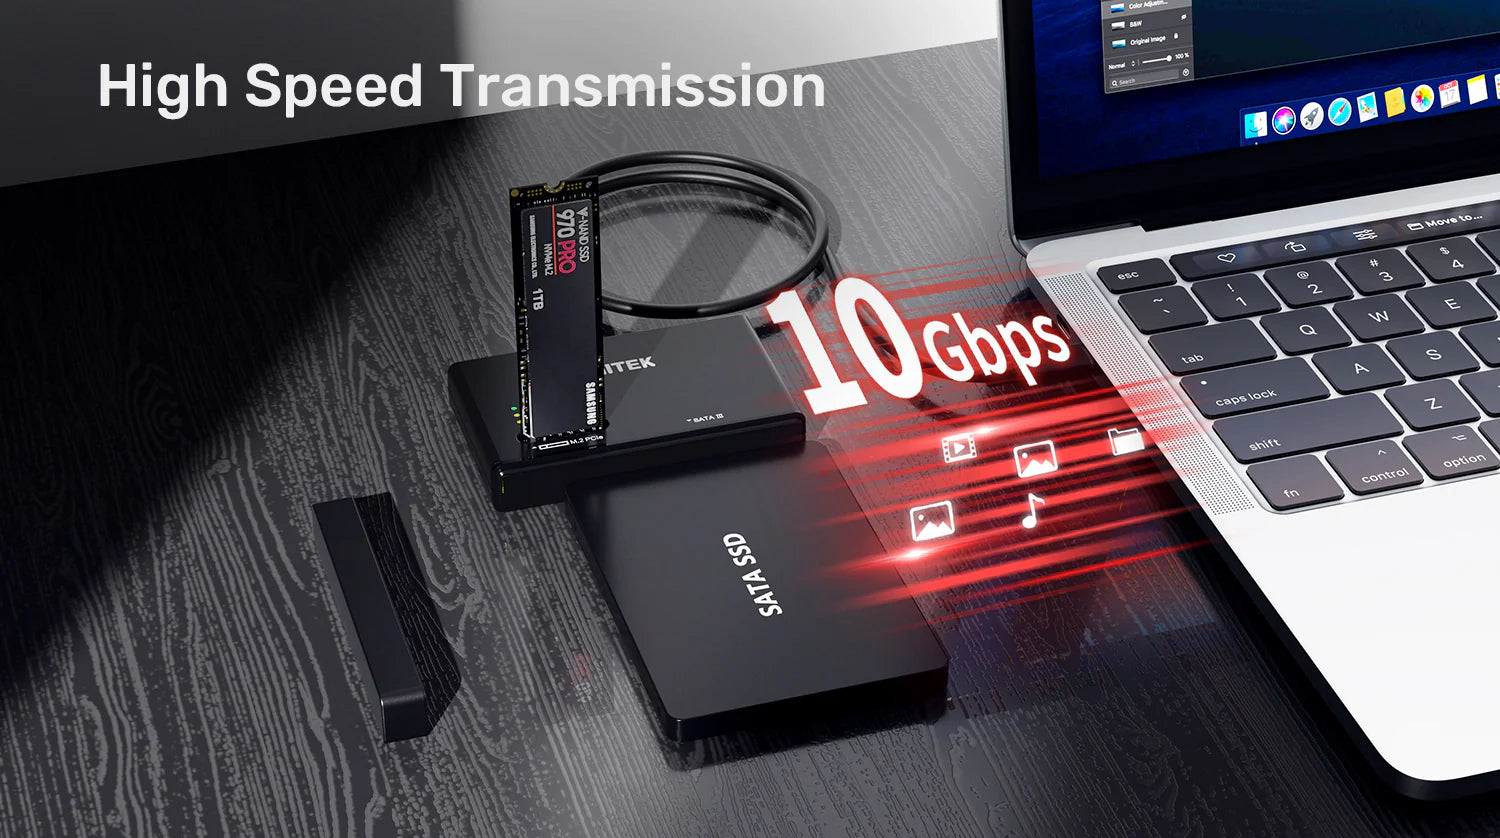 Unitek NVMe M.2 SSD Enclosure Adapter, USB-C 10Gbps to SATA3 & M.2 SSD, 12V2A Power Adaptor